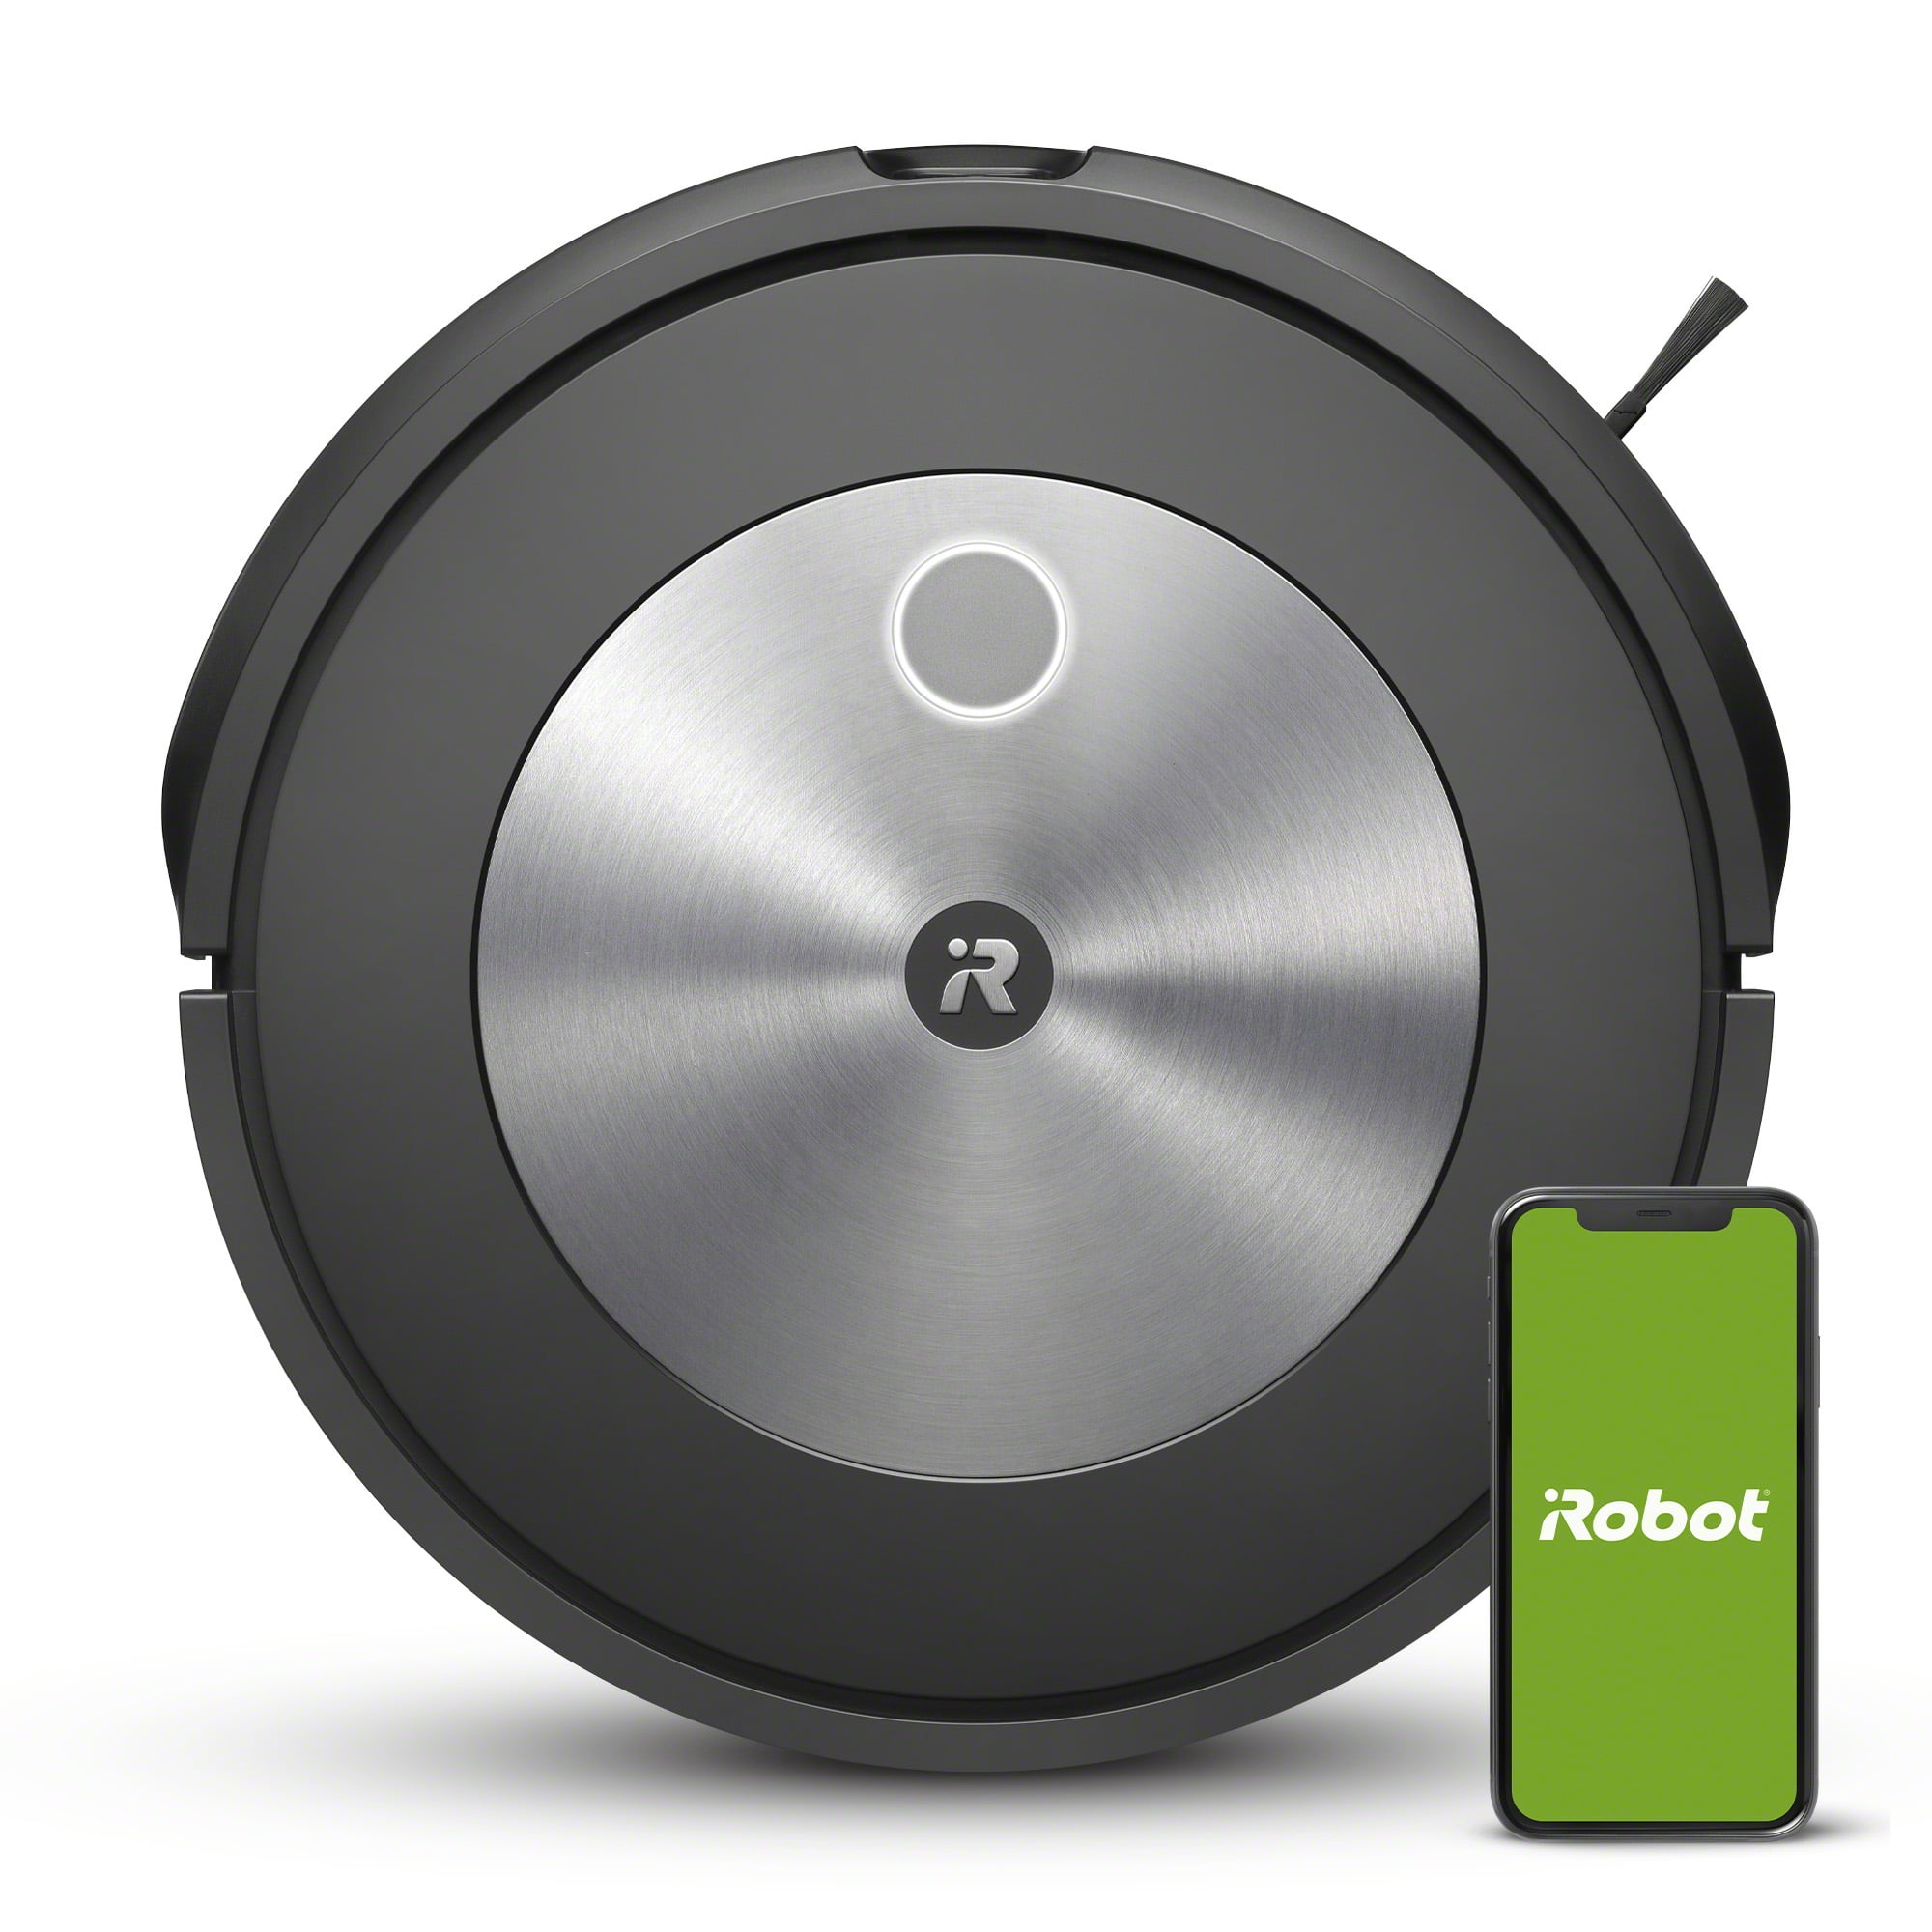 iRobot Roomba i7 Robot Vacuum Cleaner - Black (7150) for sale